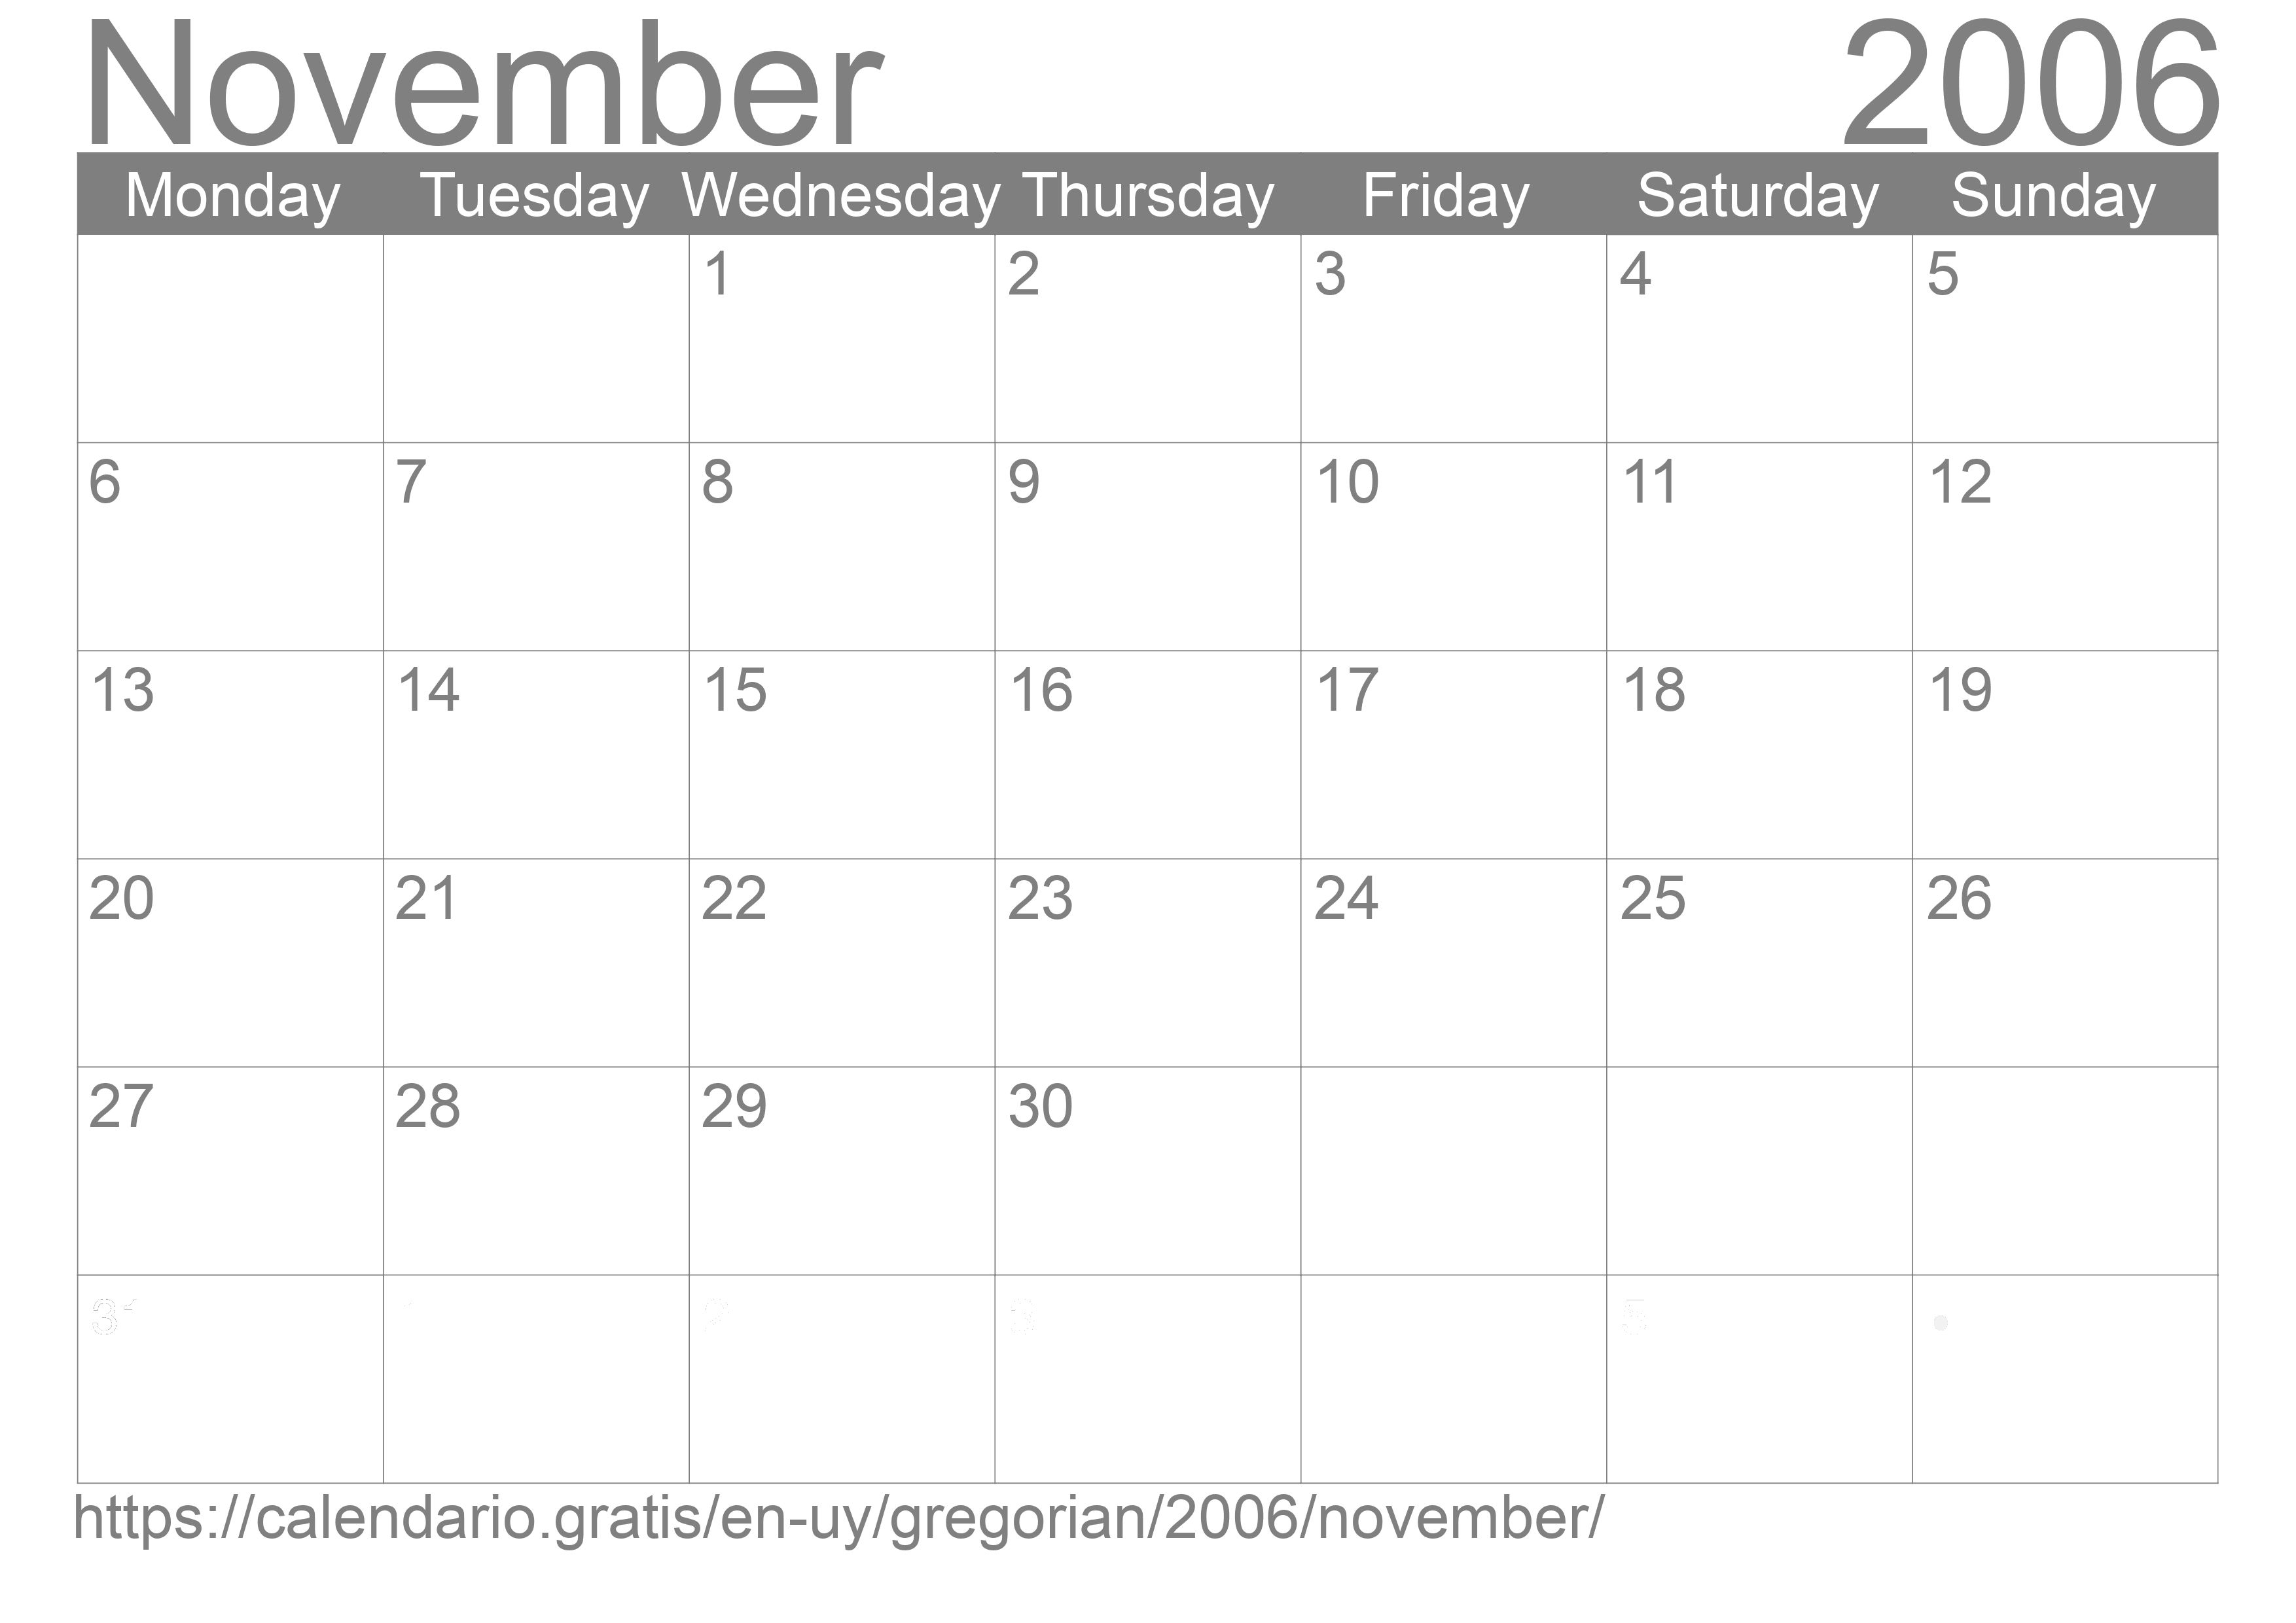 Calendar November 2006 to print